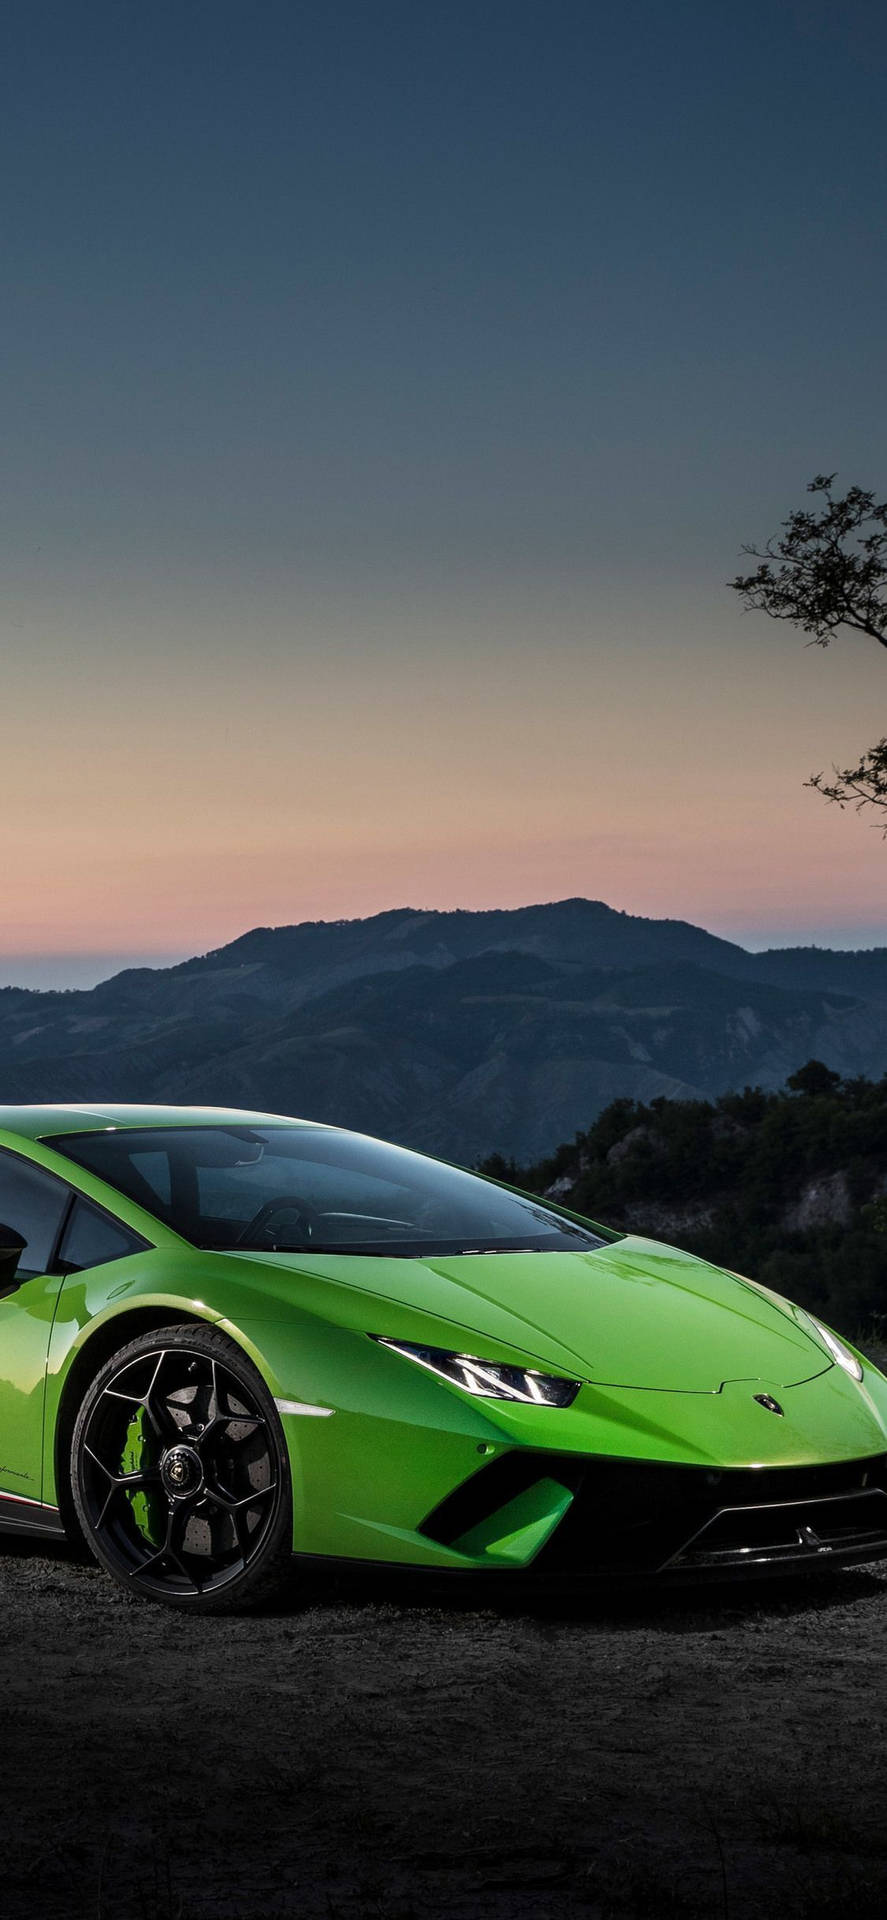 Lamborghini In Mountains Iphone Car Wallpaper